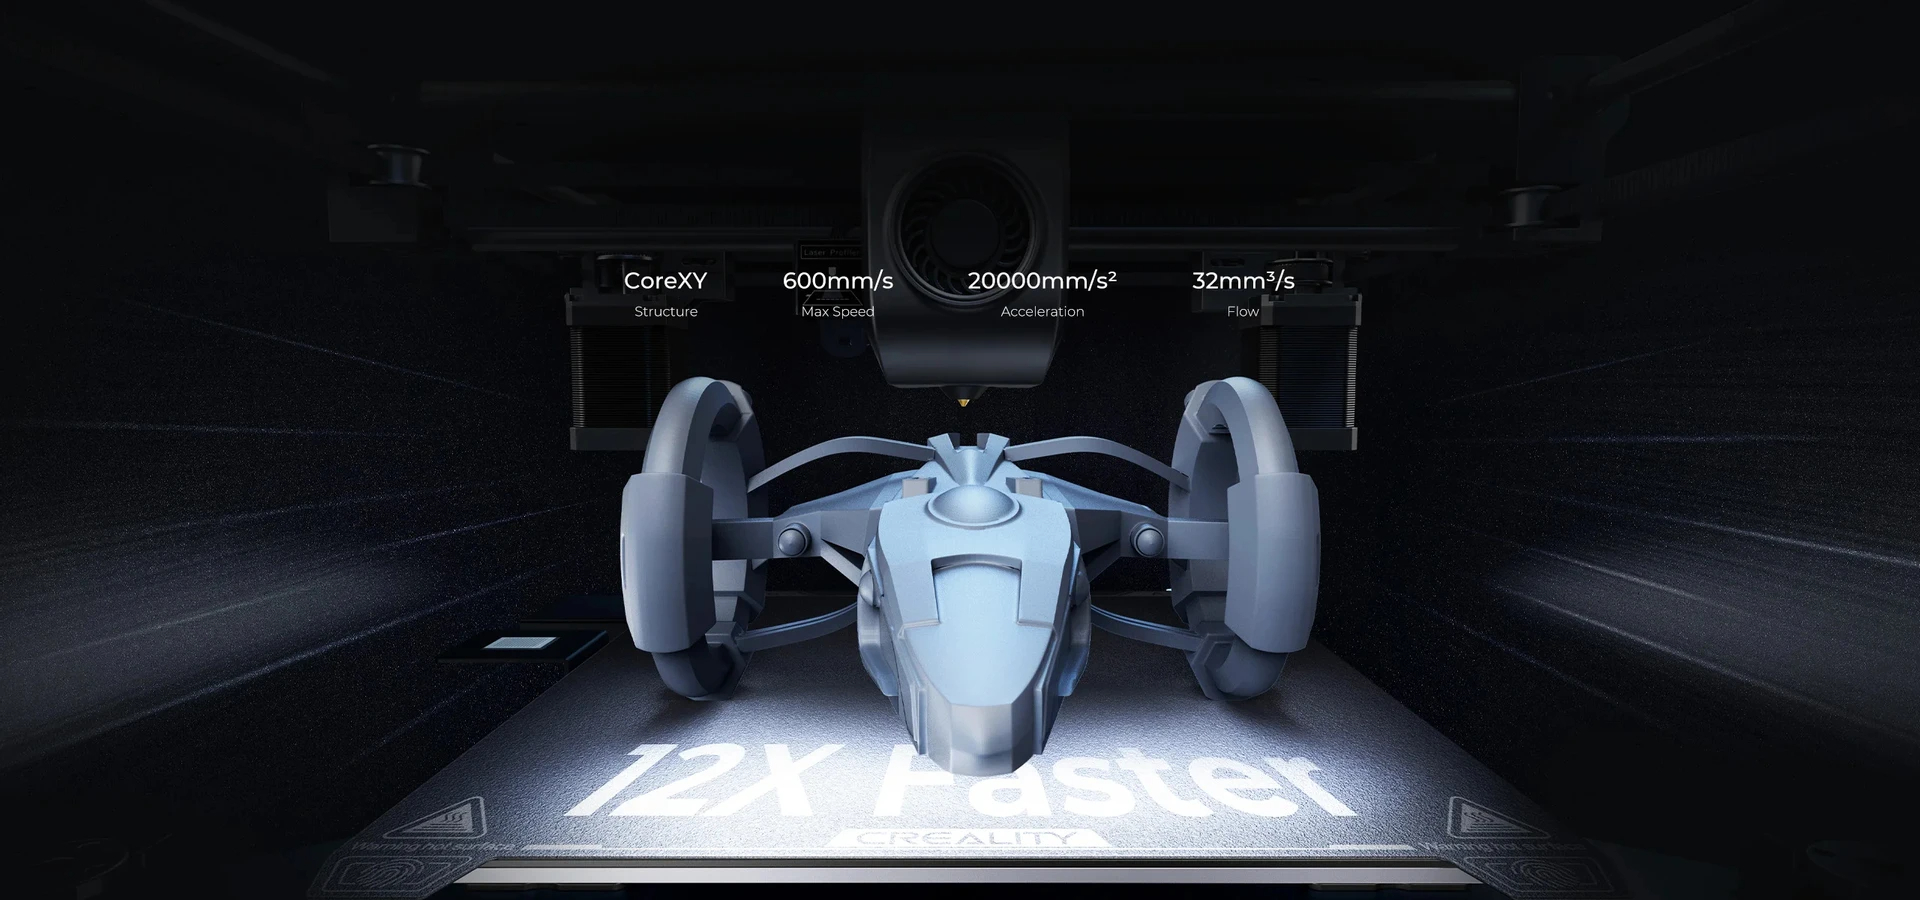  Official Creality K1, FDM 3D Printers 600mm/s Max